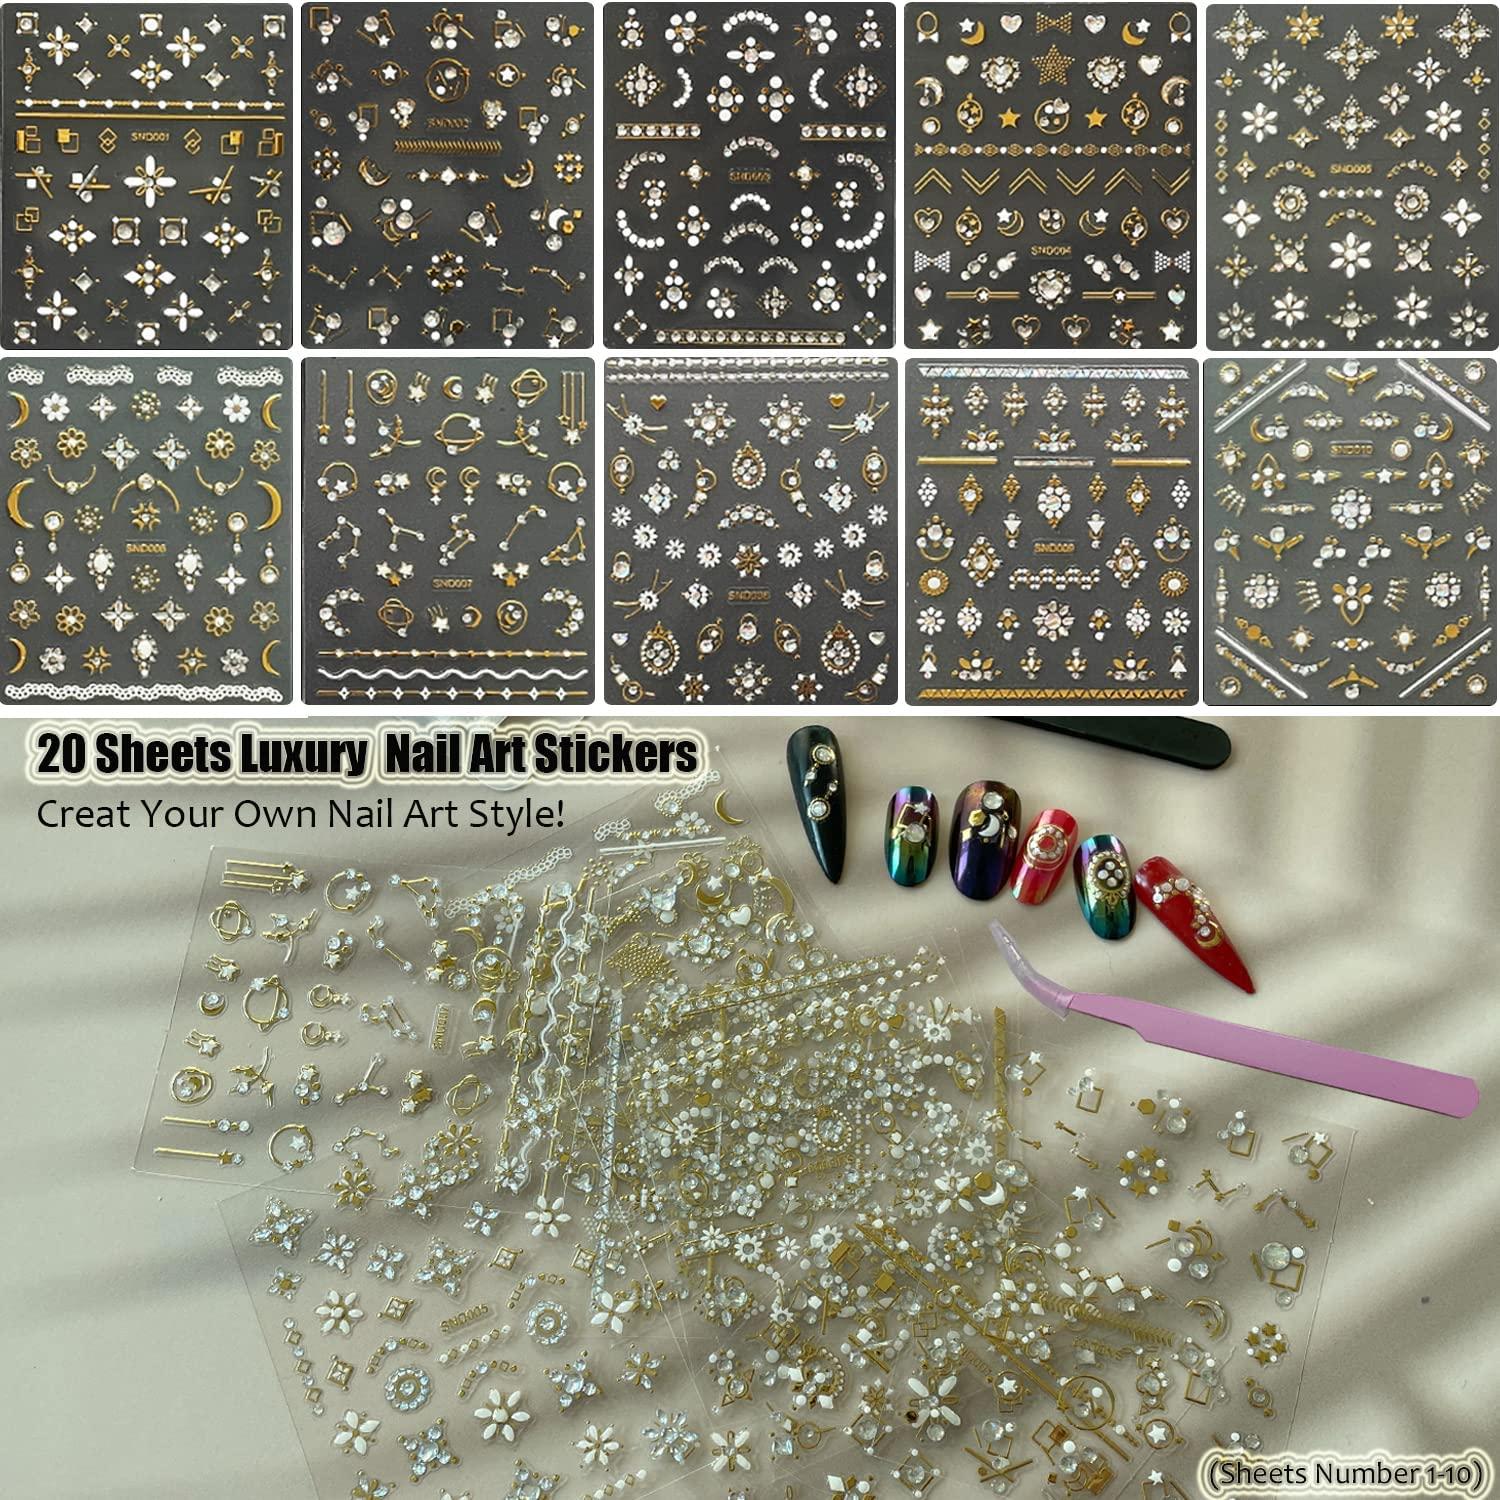  16 Sheet Nail Art Stickers Decals, Luxury Diamond